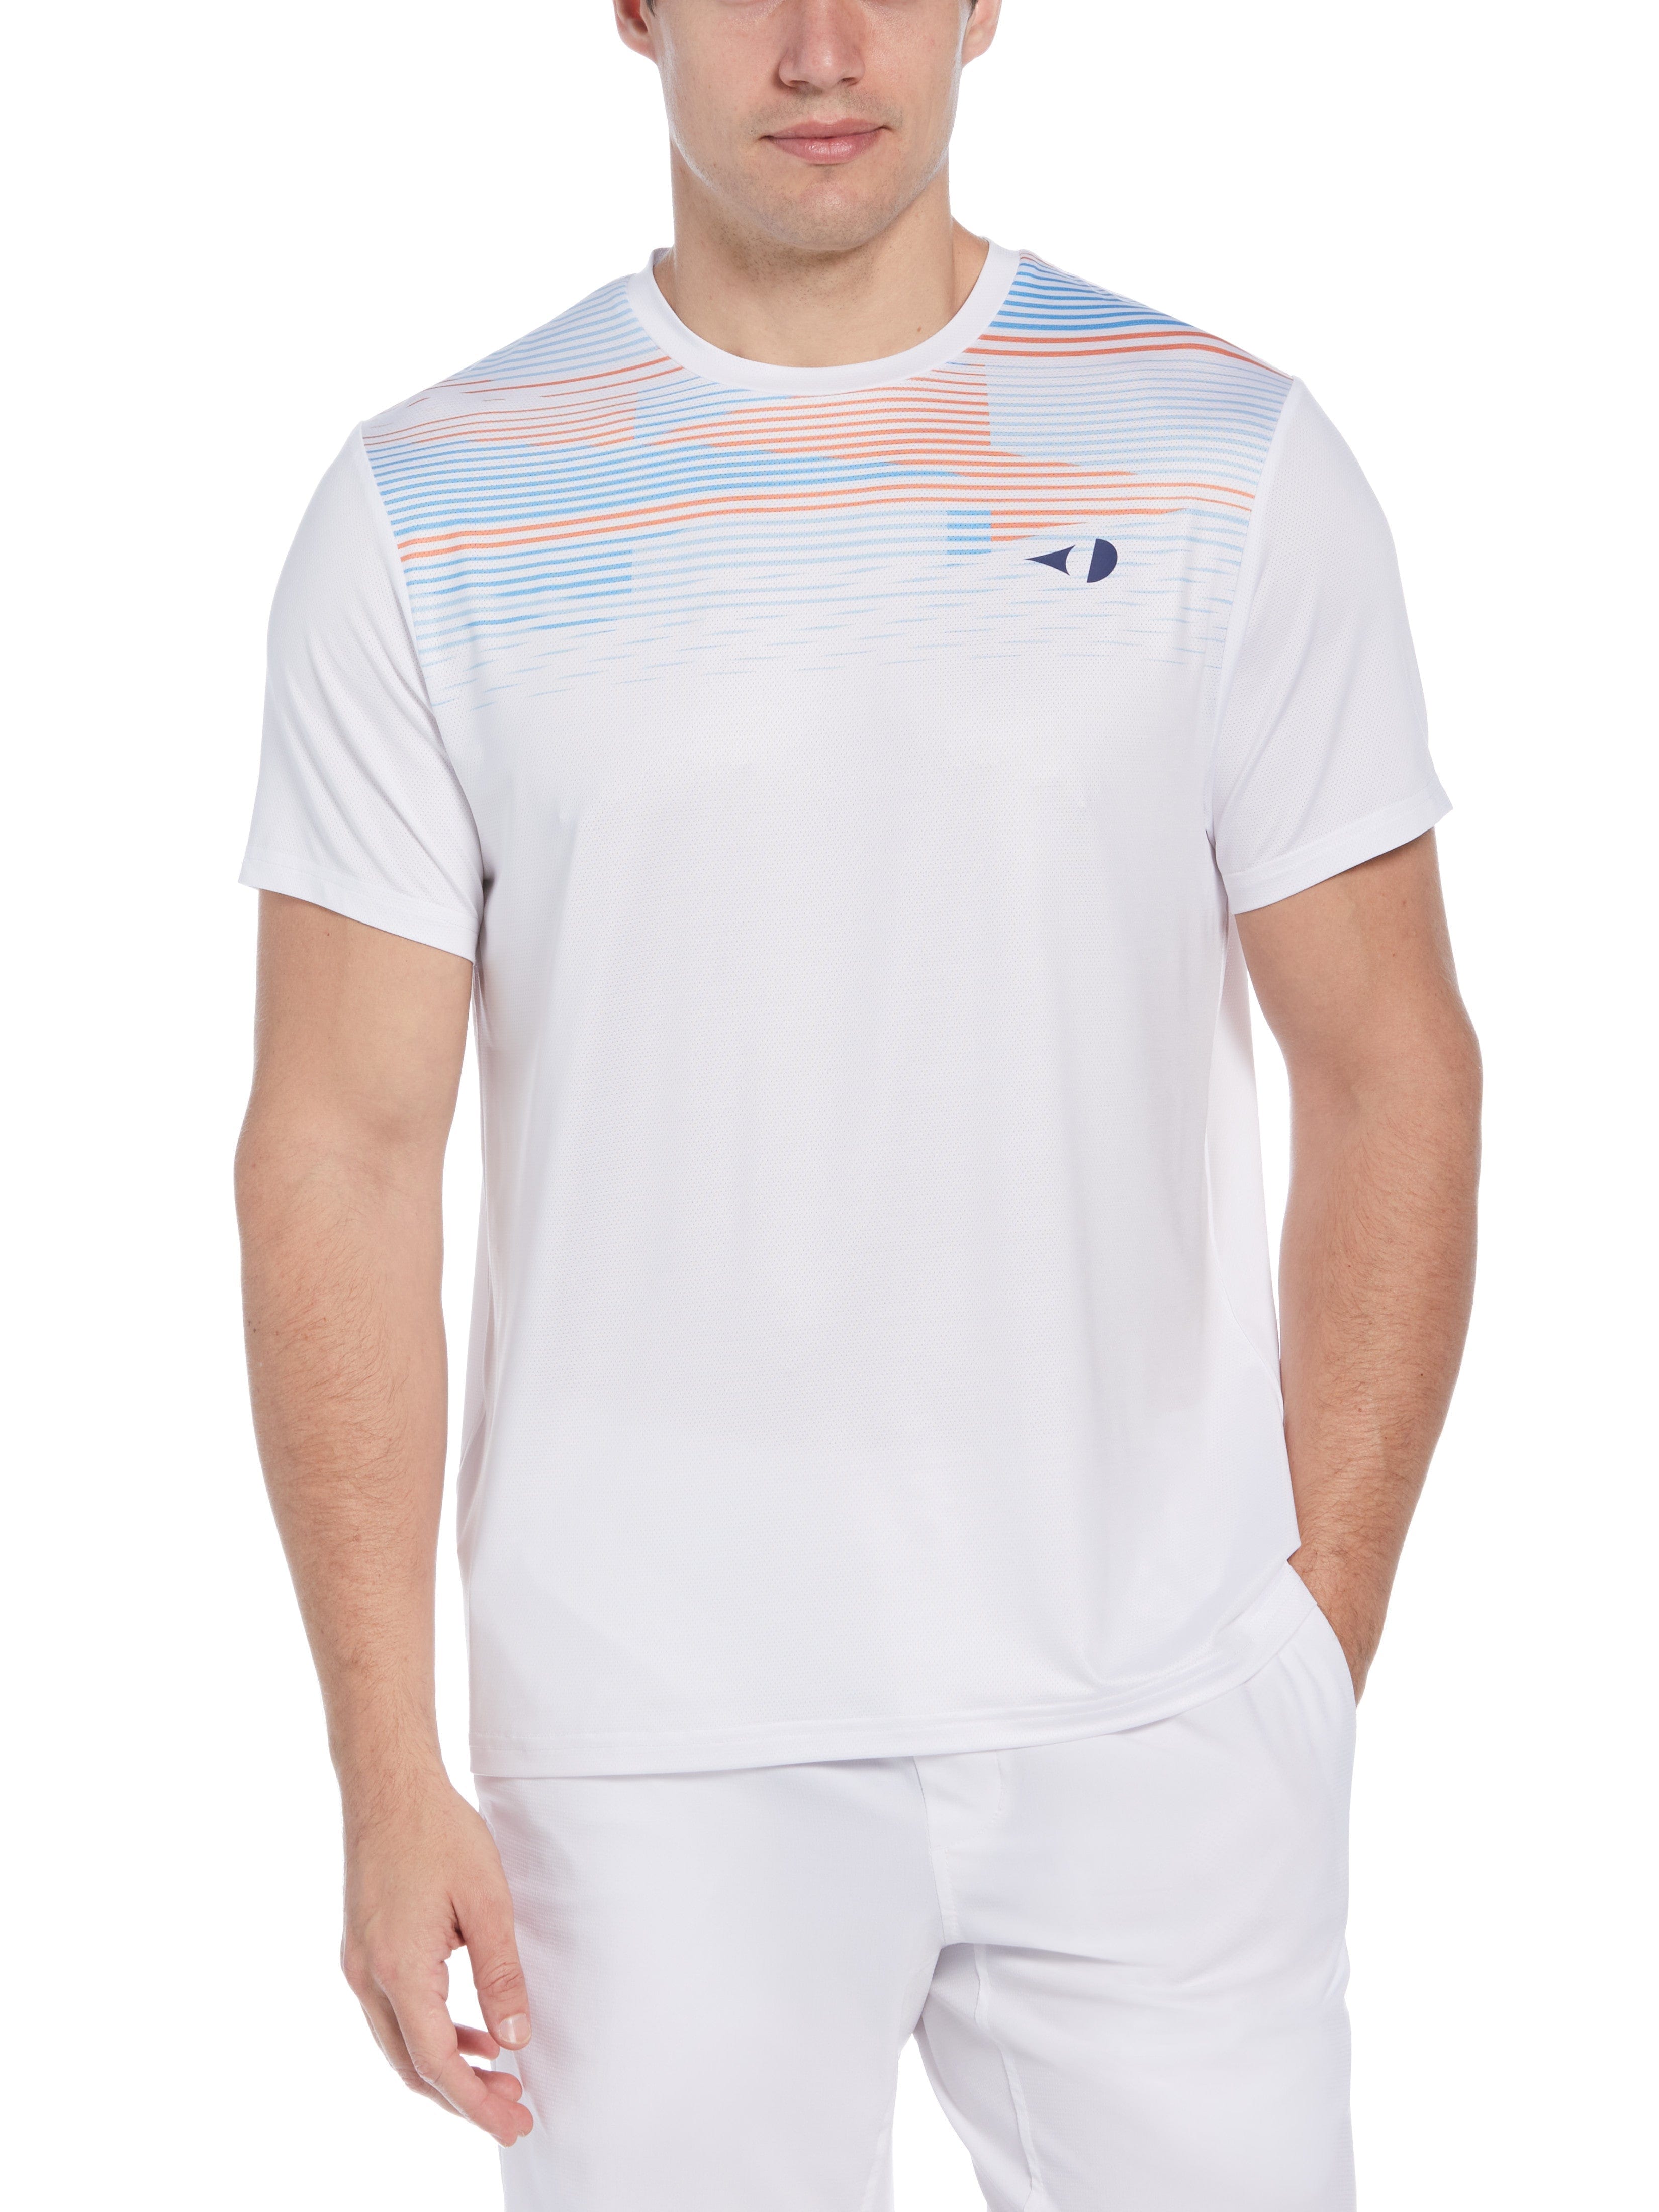 Grand Slam Mens Linear Chest Printed Tennis T-Shirt, Size 2XL, White, Polyester/Spandex | Golf Apparel Shop